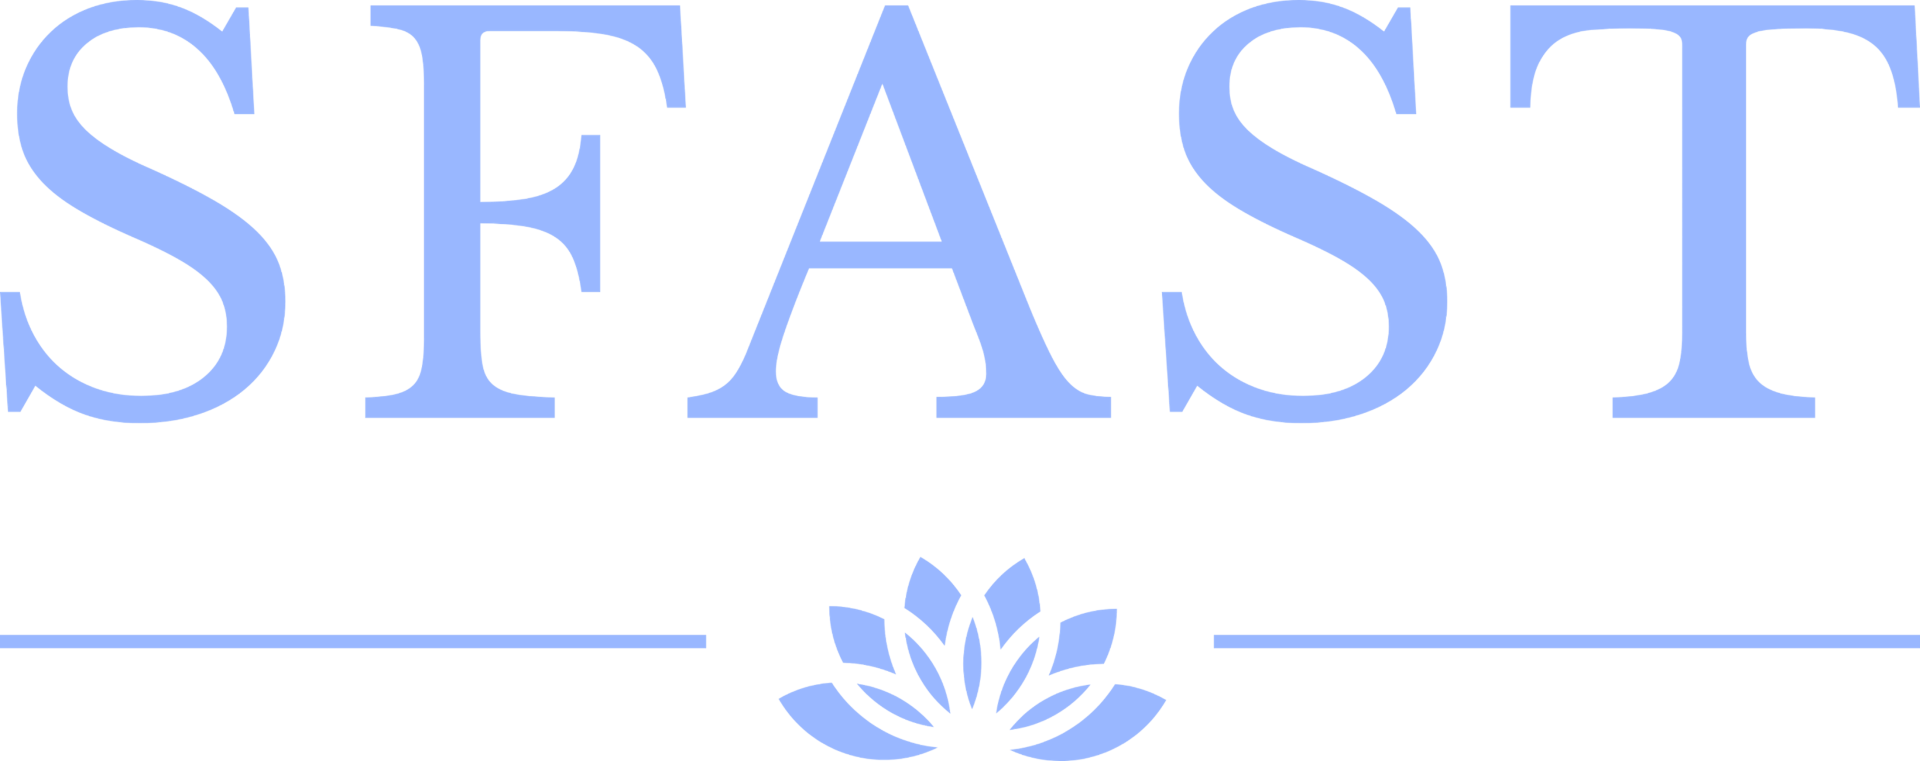 S-FAST Logo